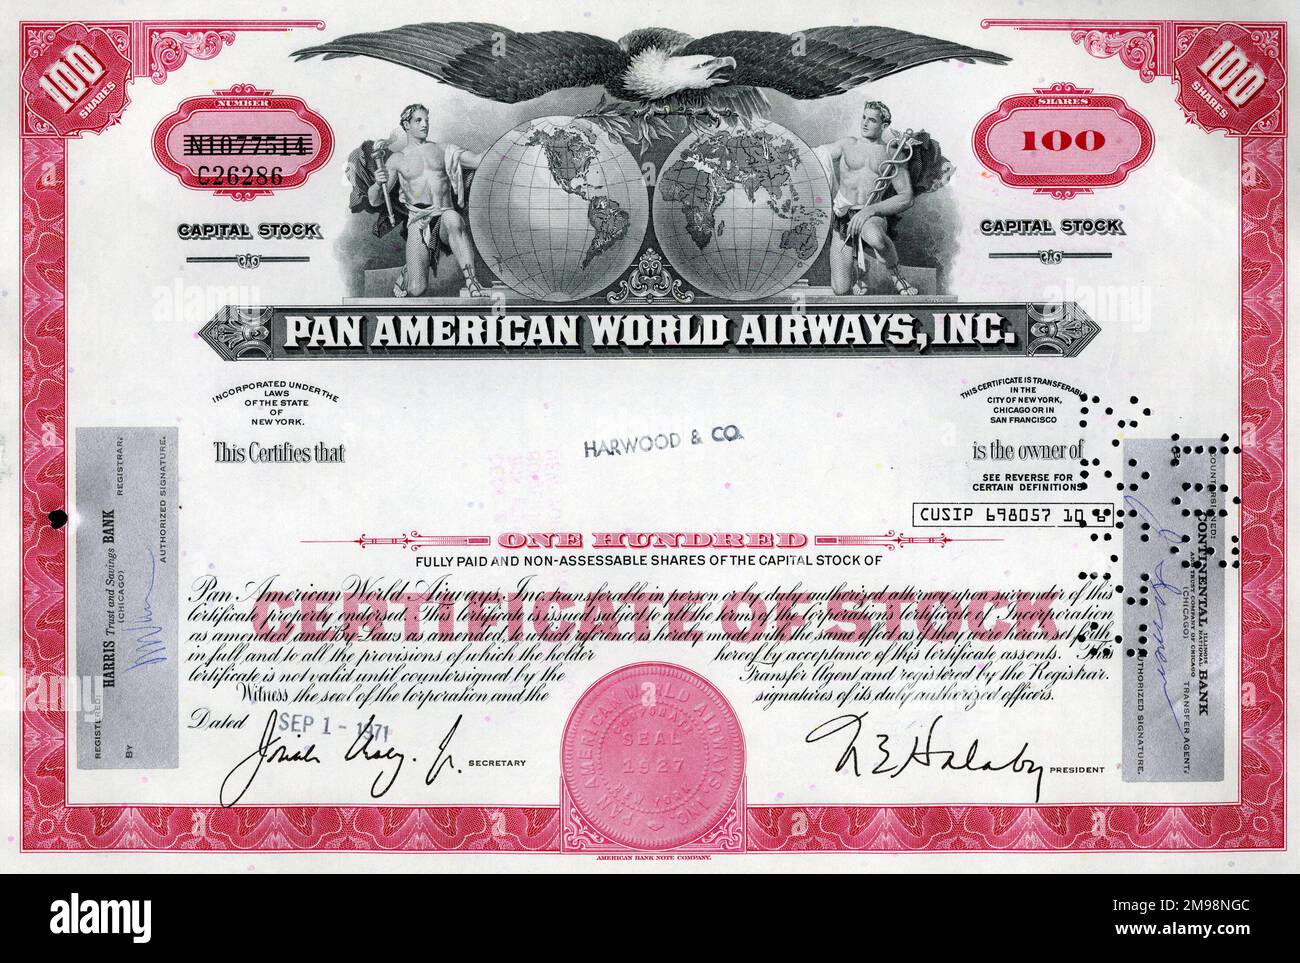 Stock Share Certificate - Pan American World Airways Inc, 100 shares. Stock Photo